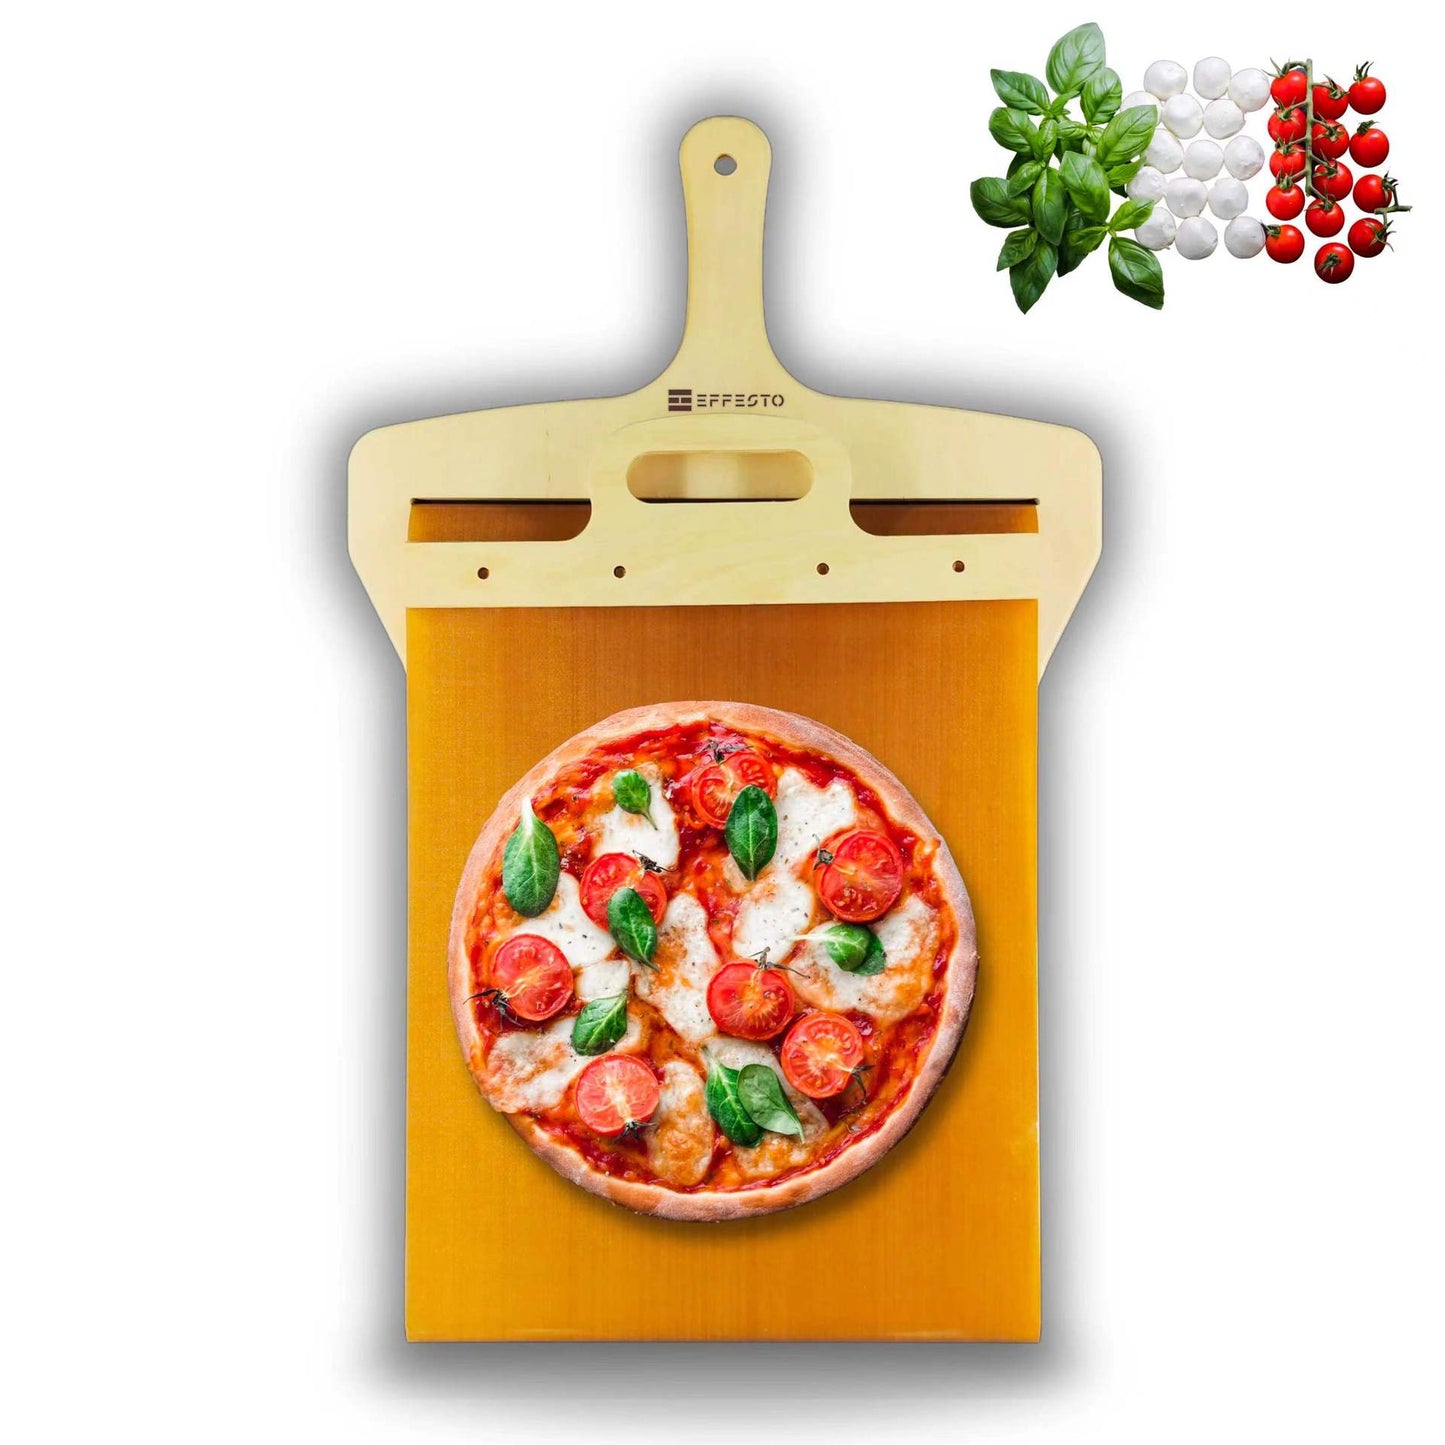 Pizzapro Artisanal Slide & Serve - The Last Pizza Peel You'll Ever Need